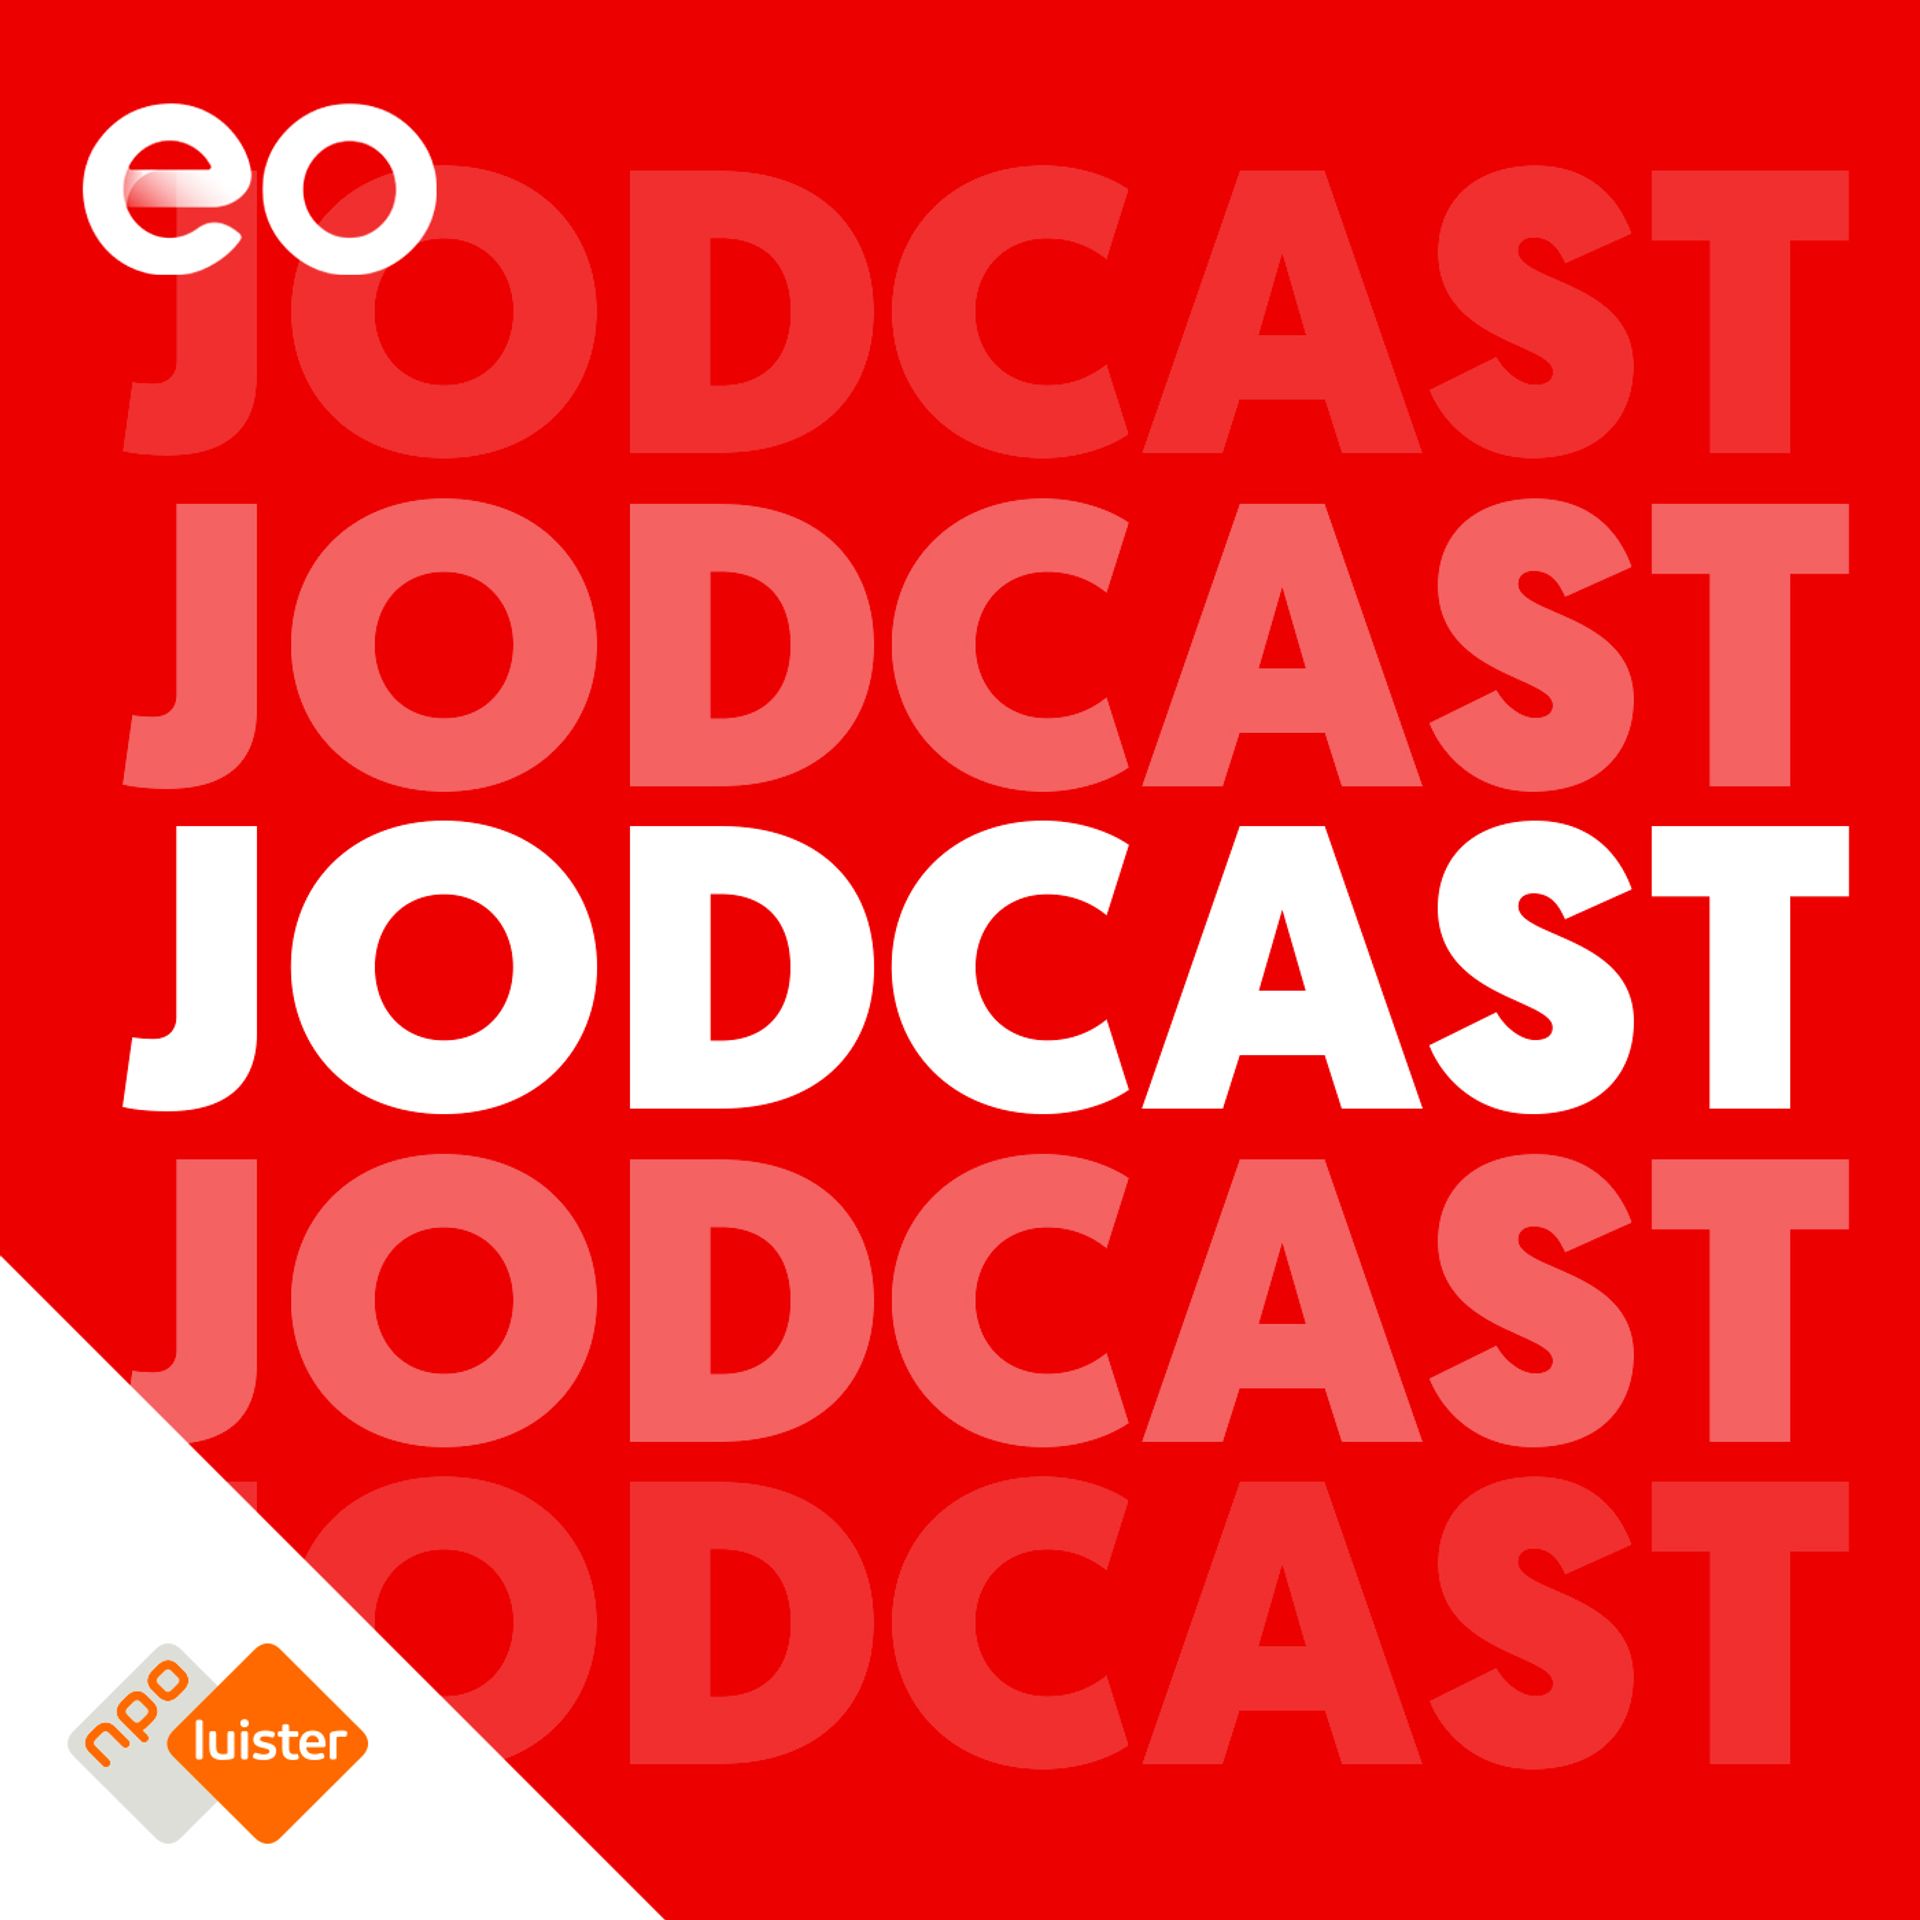 De Jodcast Podcast